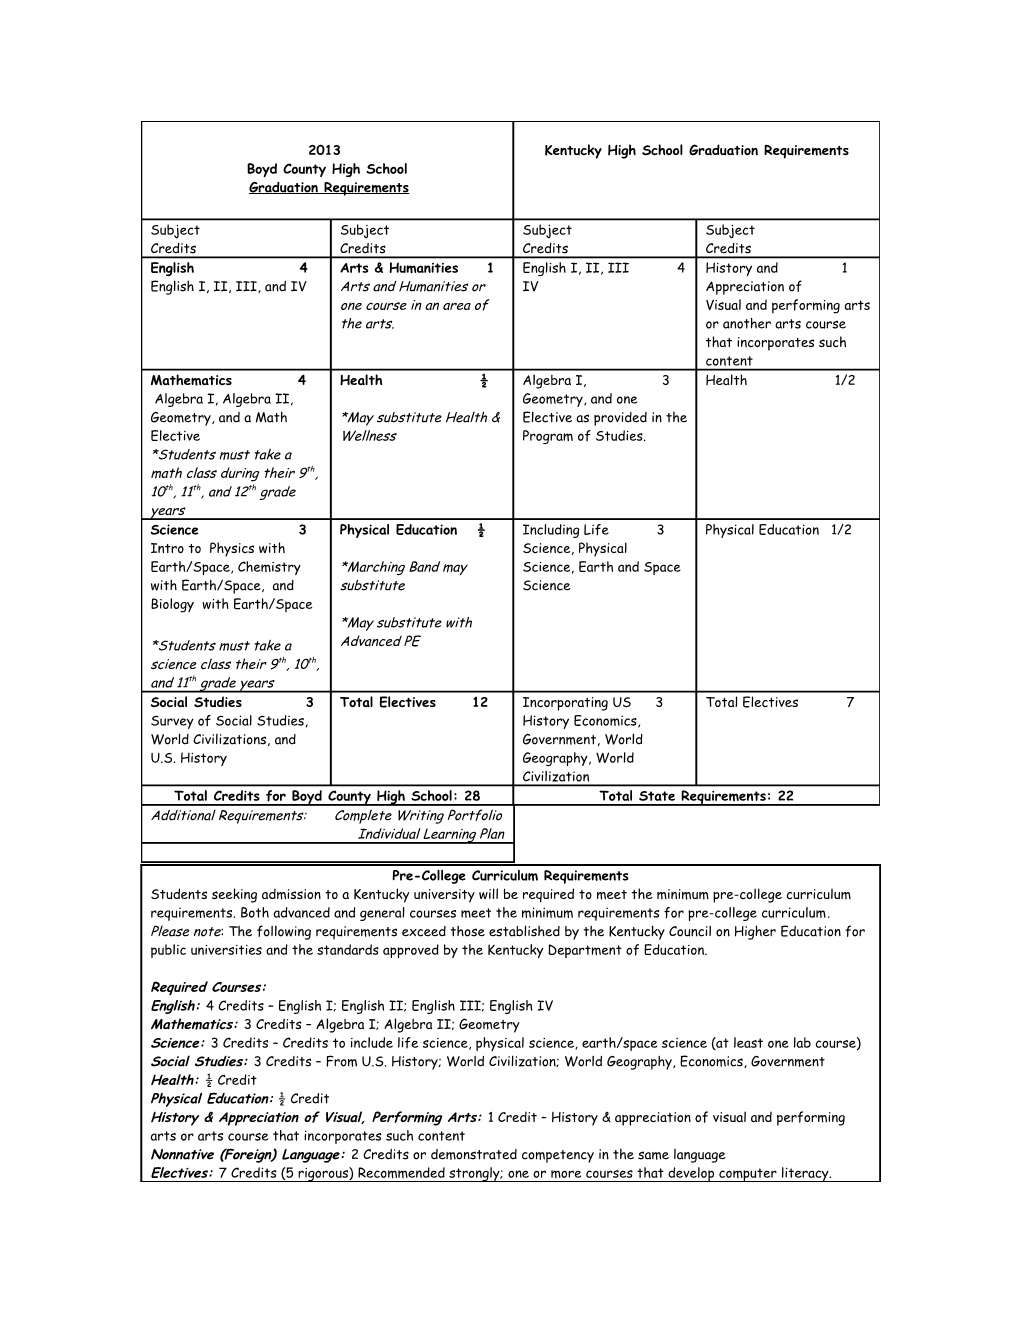 Grade Level Classification and Graduation Requirements